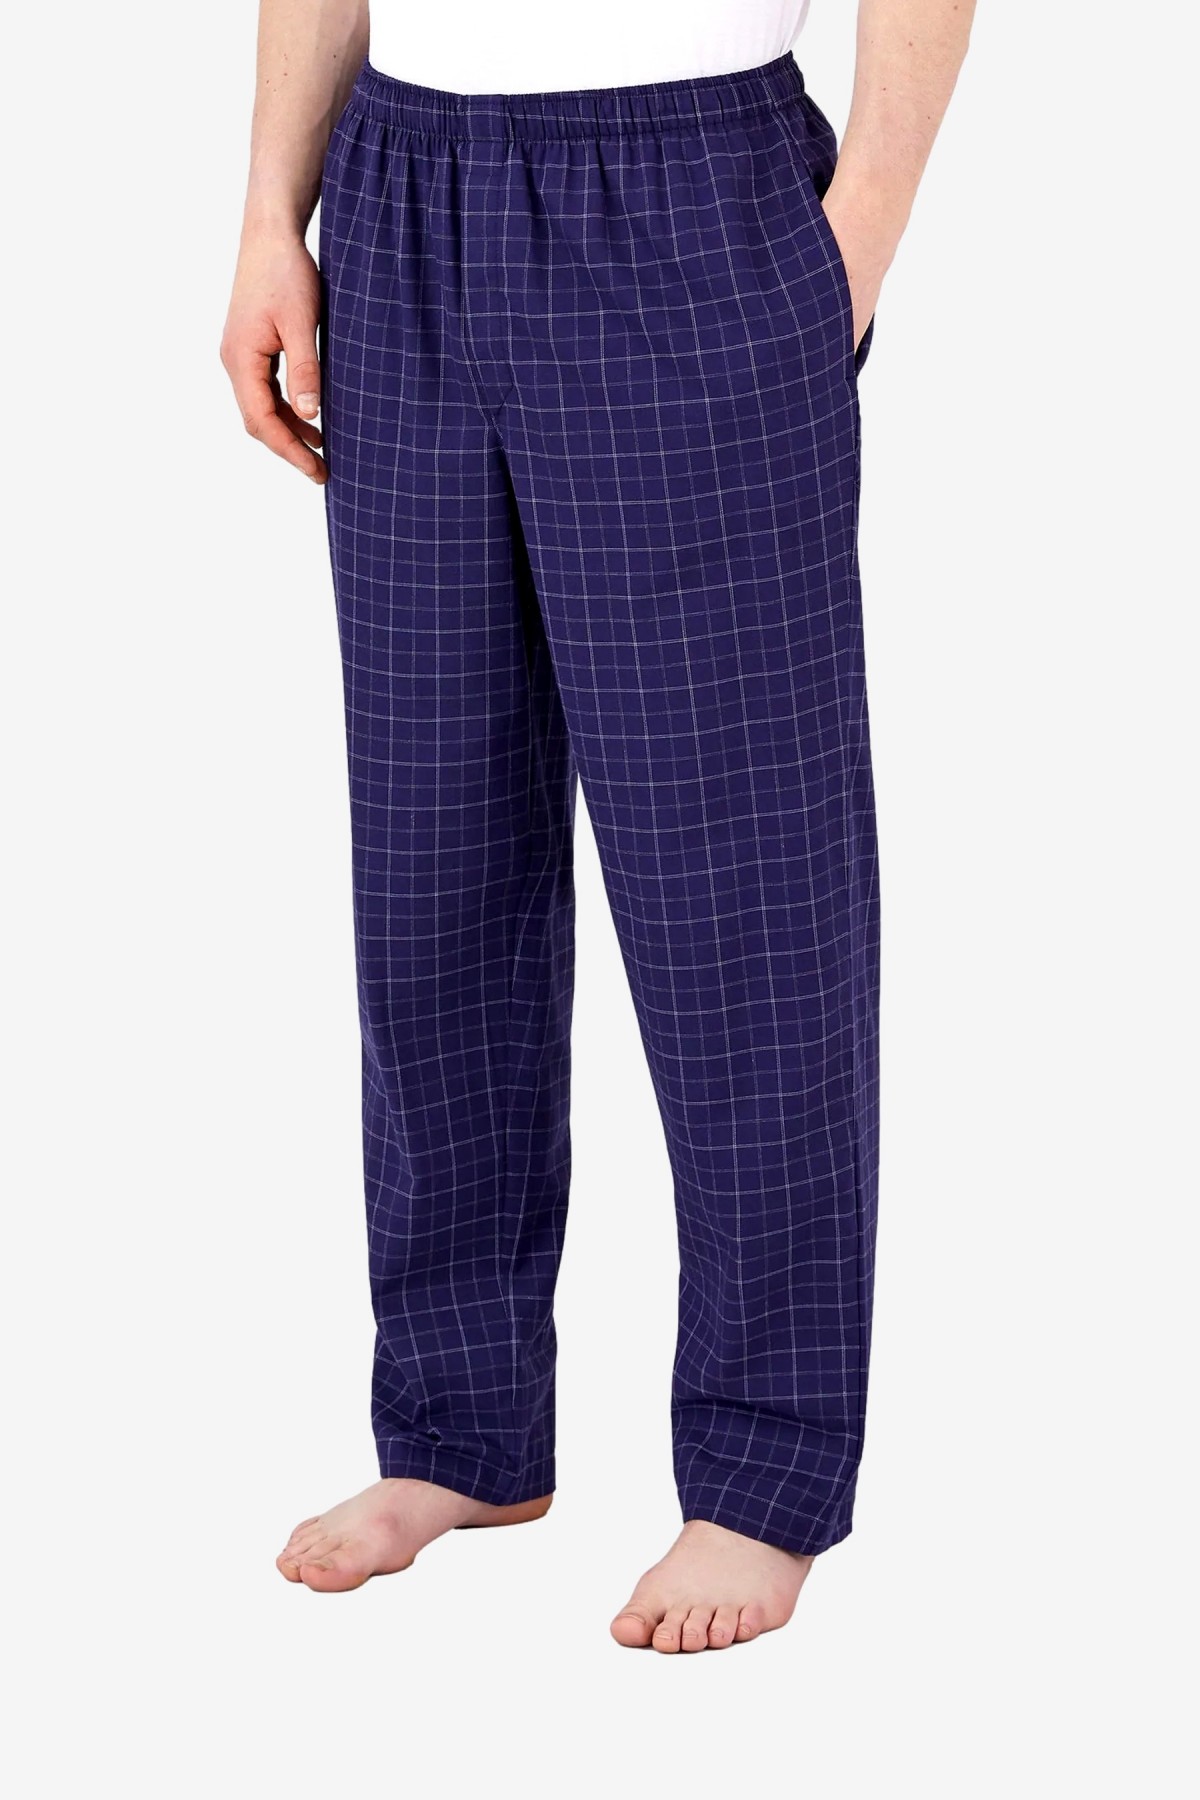 Sunspel Pyjama Trousers in Navy Check